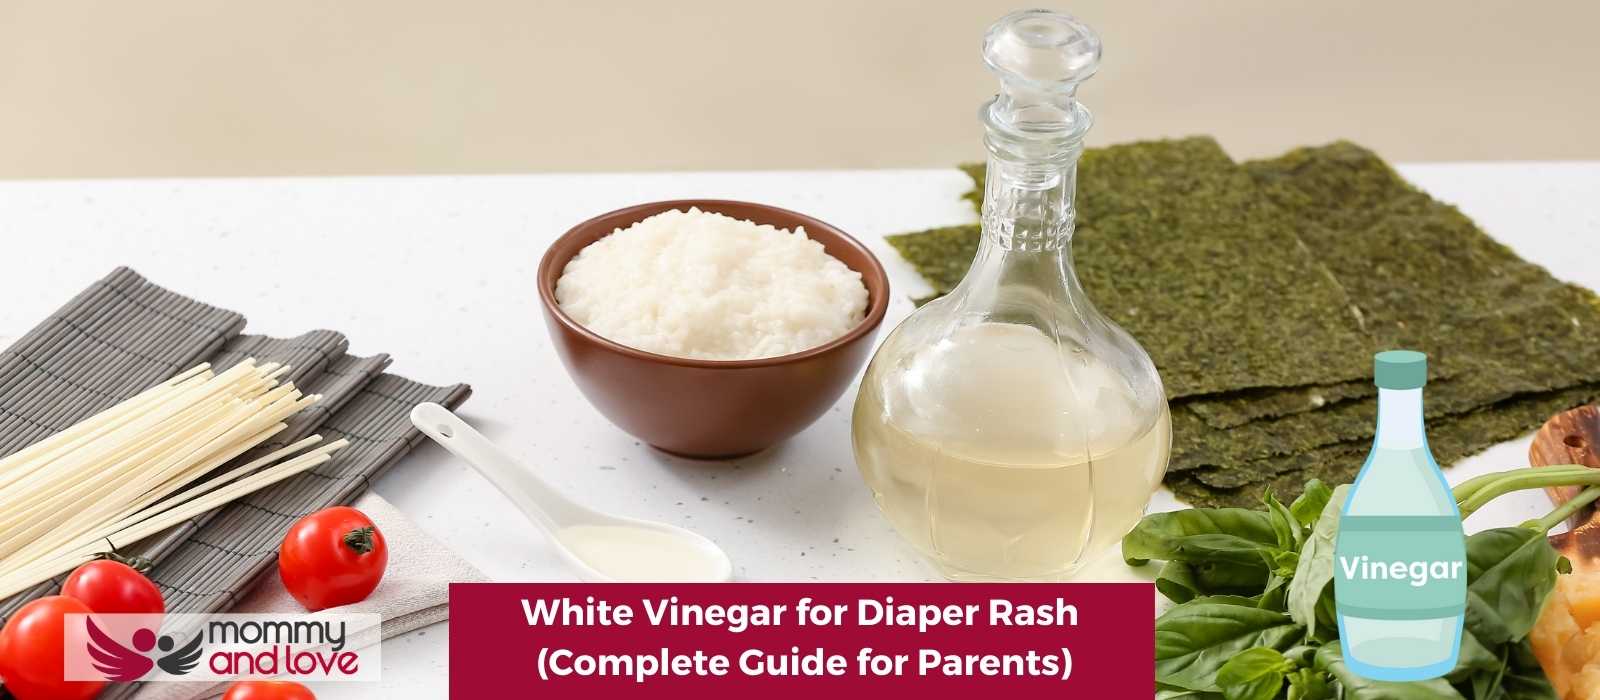 White Vinegar for Diaper Rash (Complete Guide for Parents)